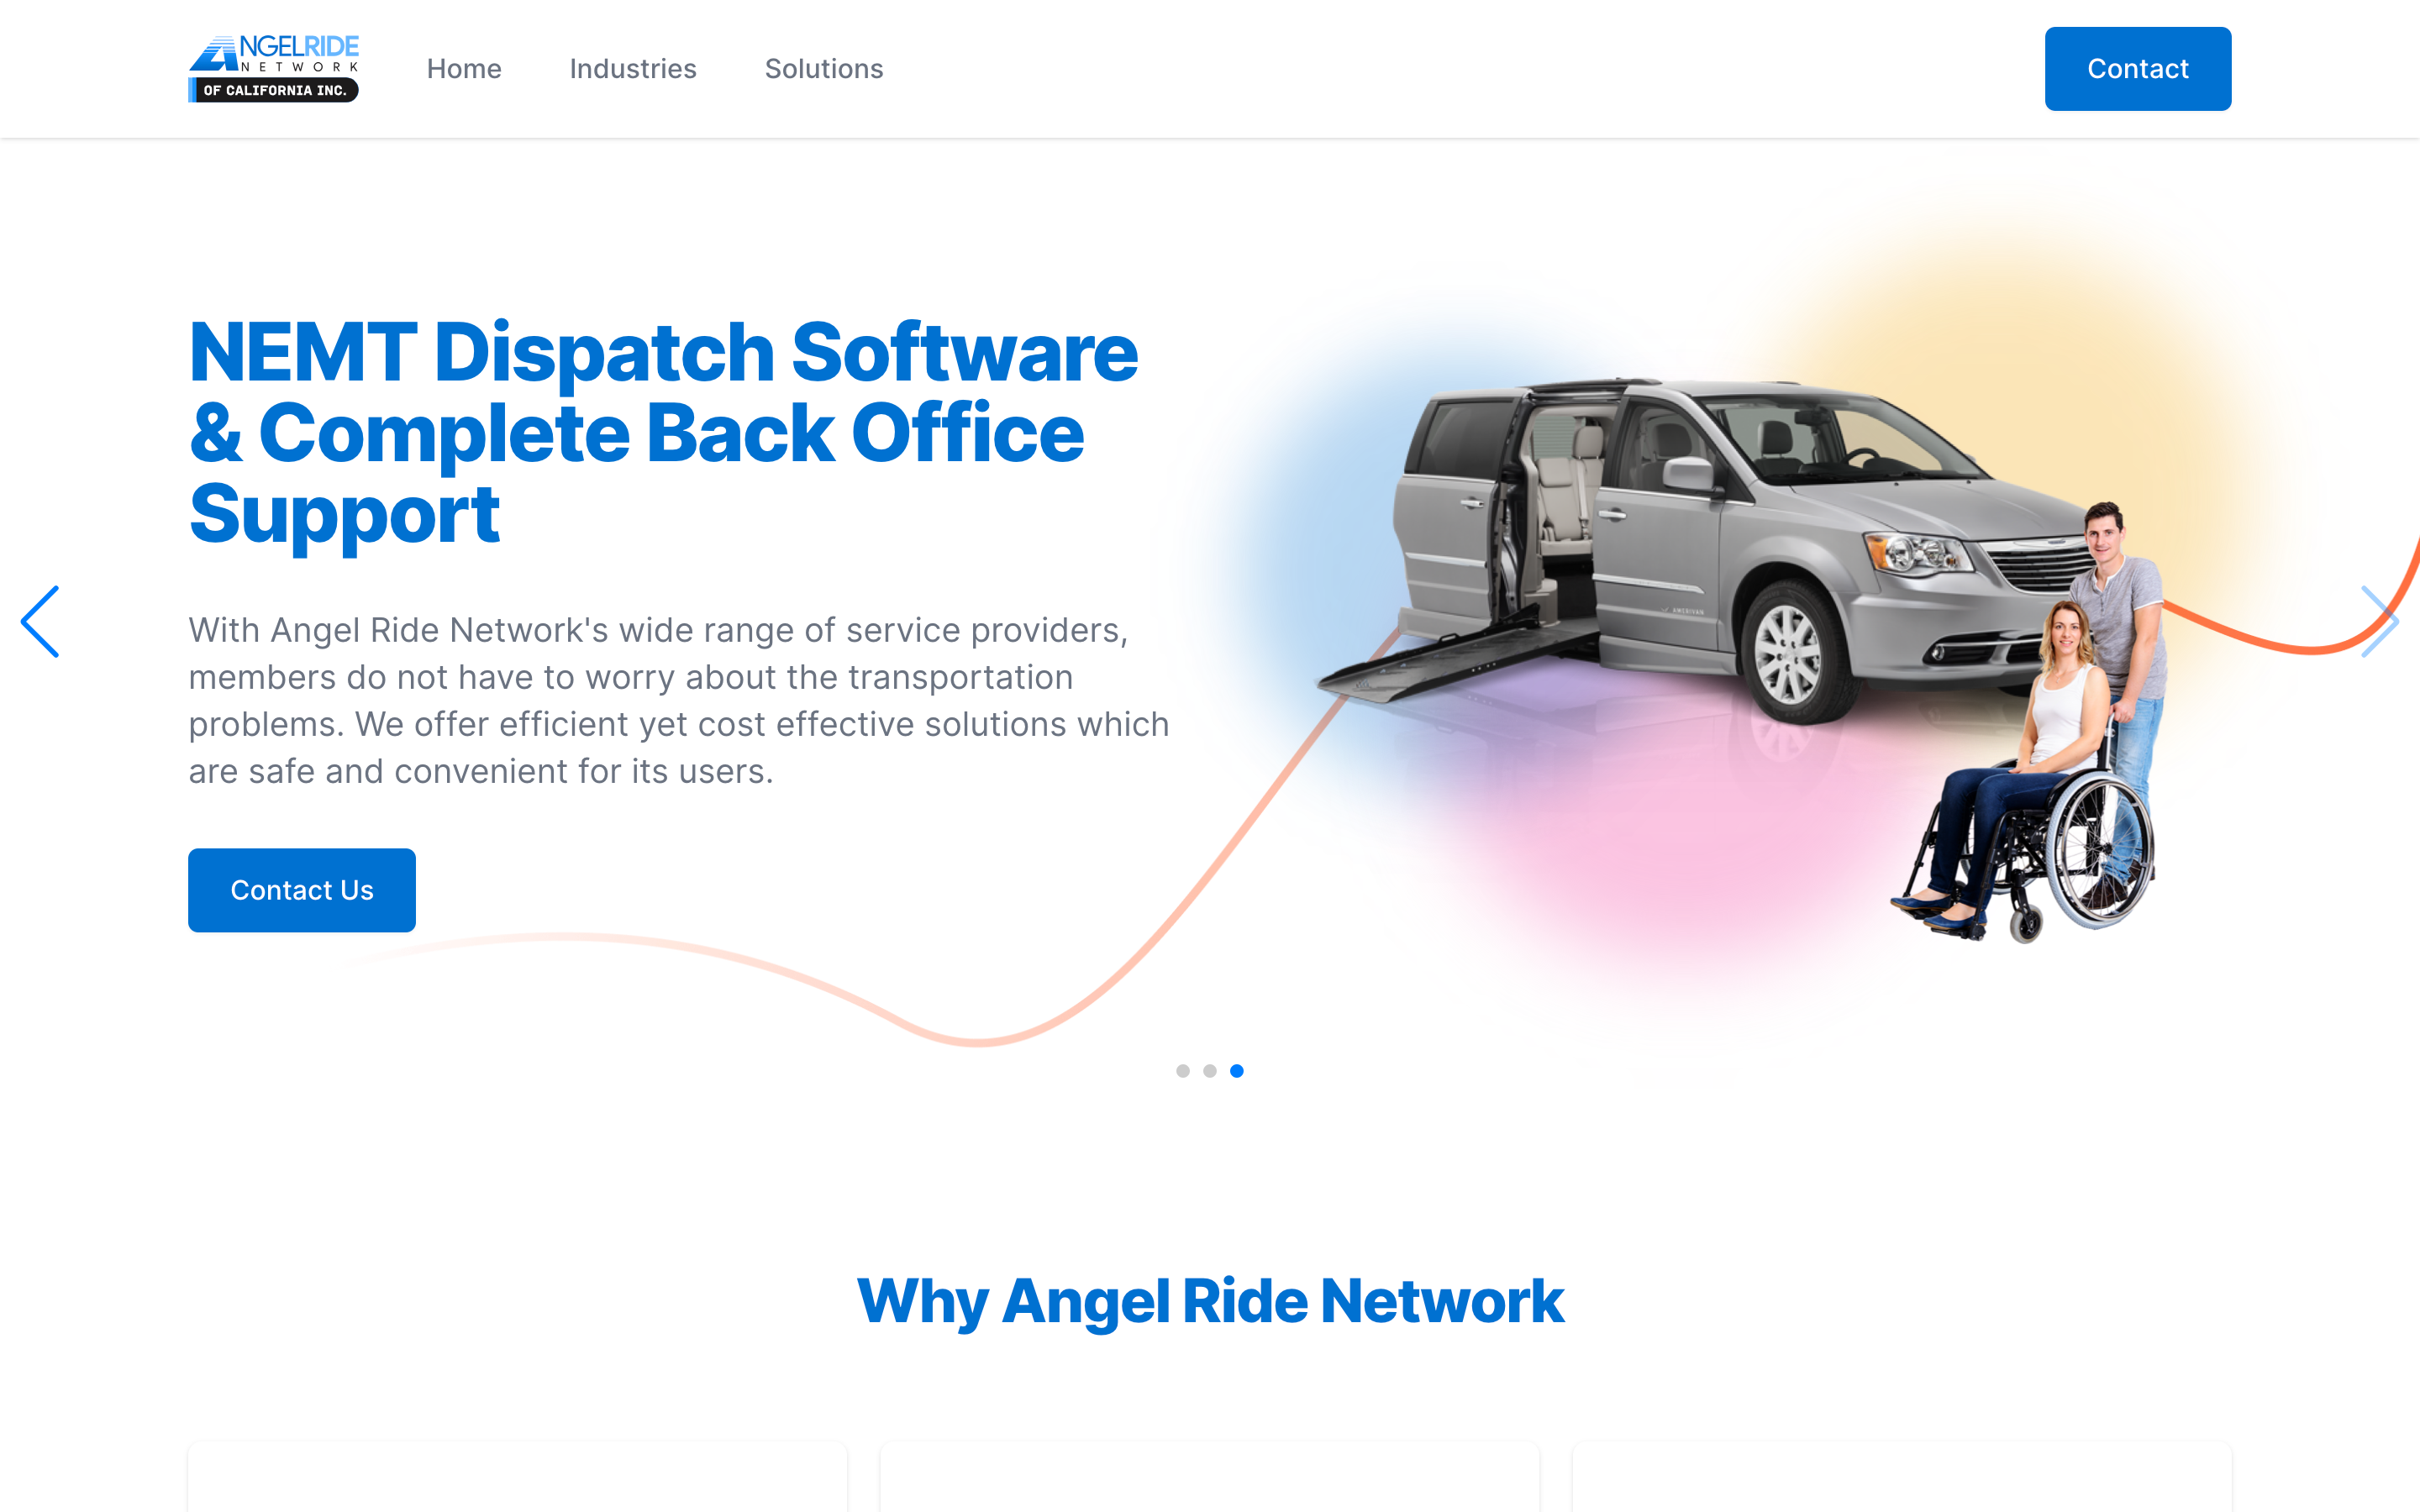 Angel Ride Network